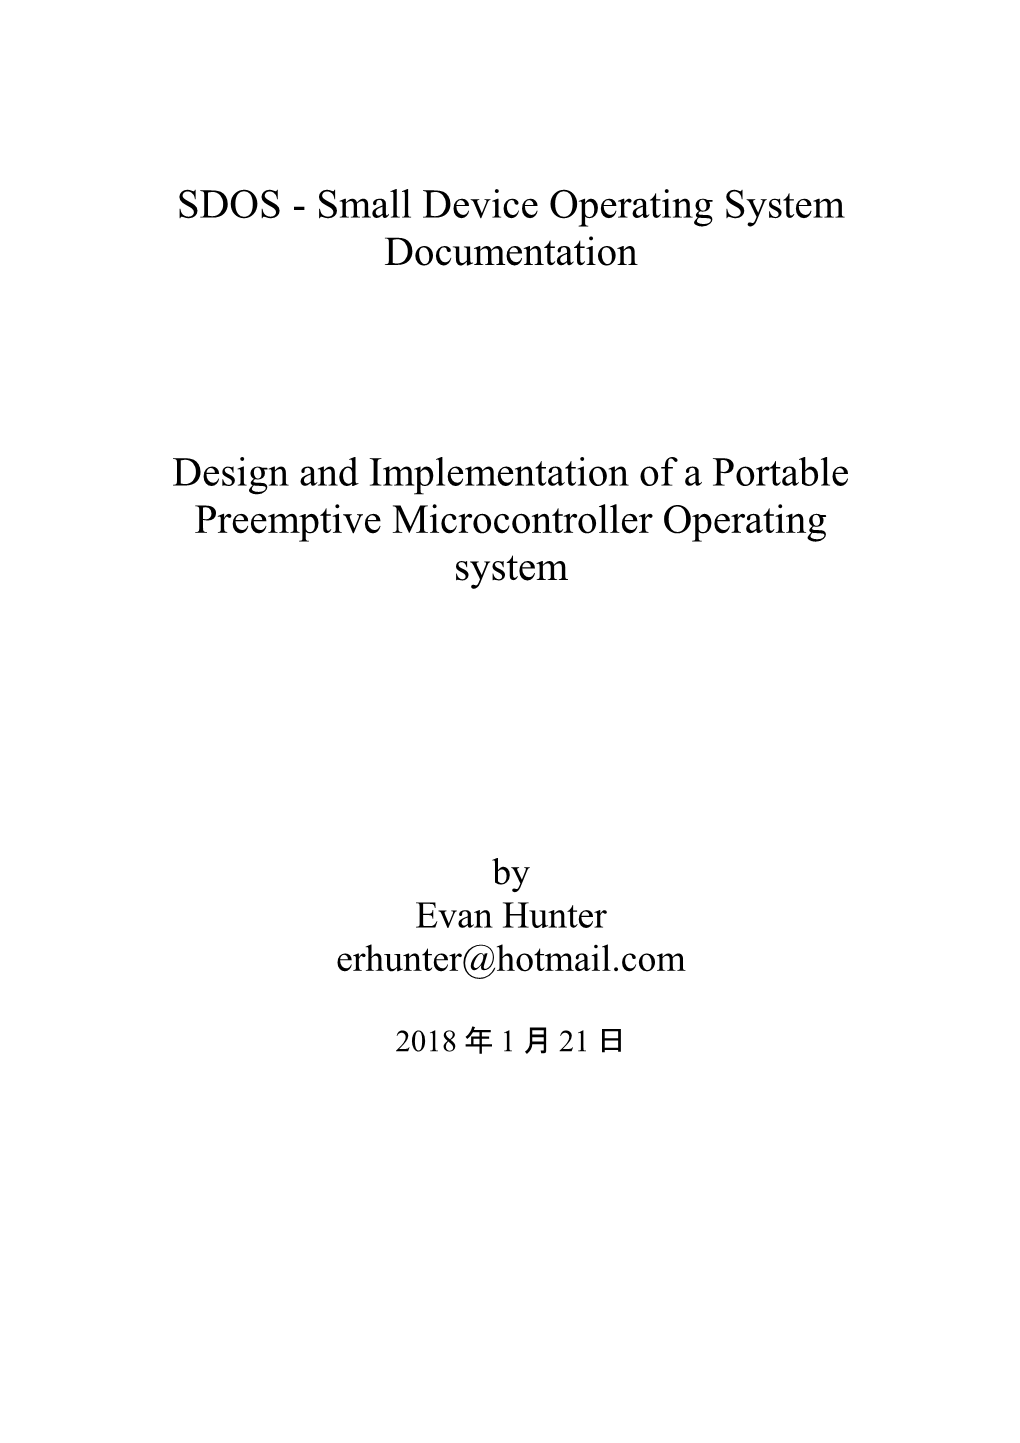 SDOS - Small Device Operating System Documentation